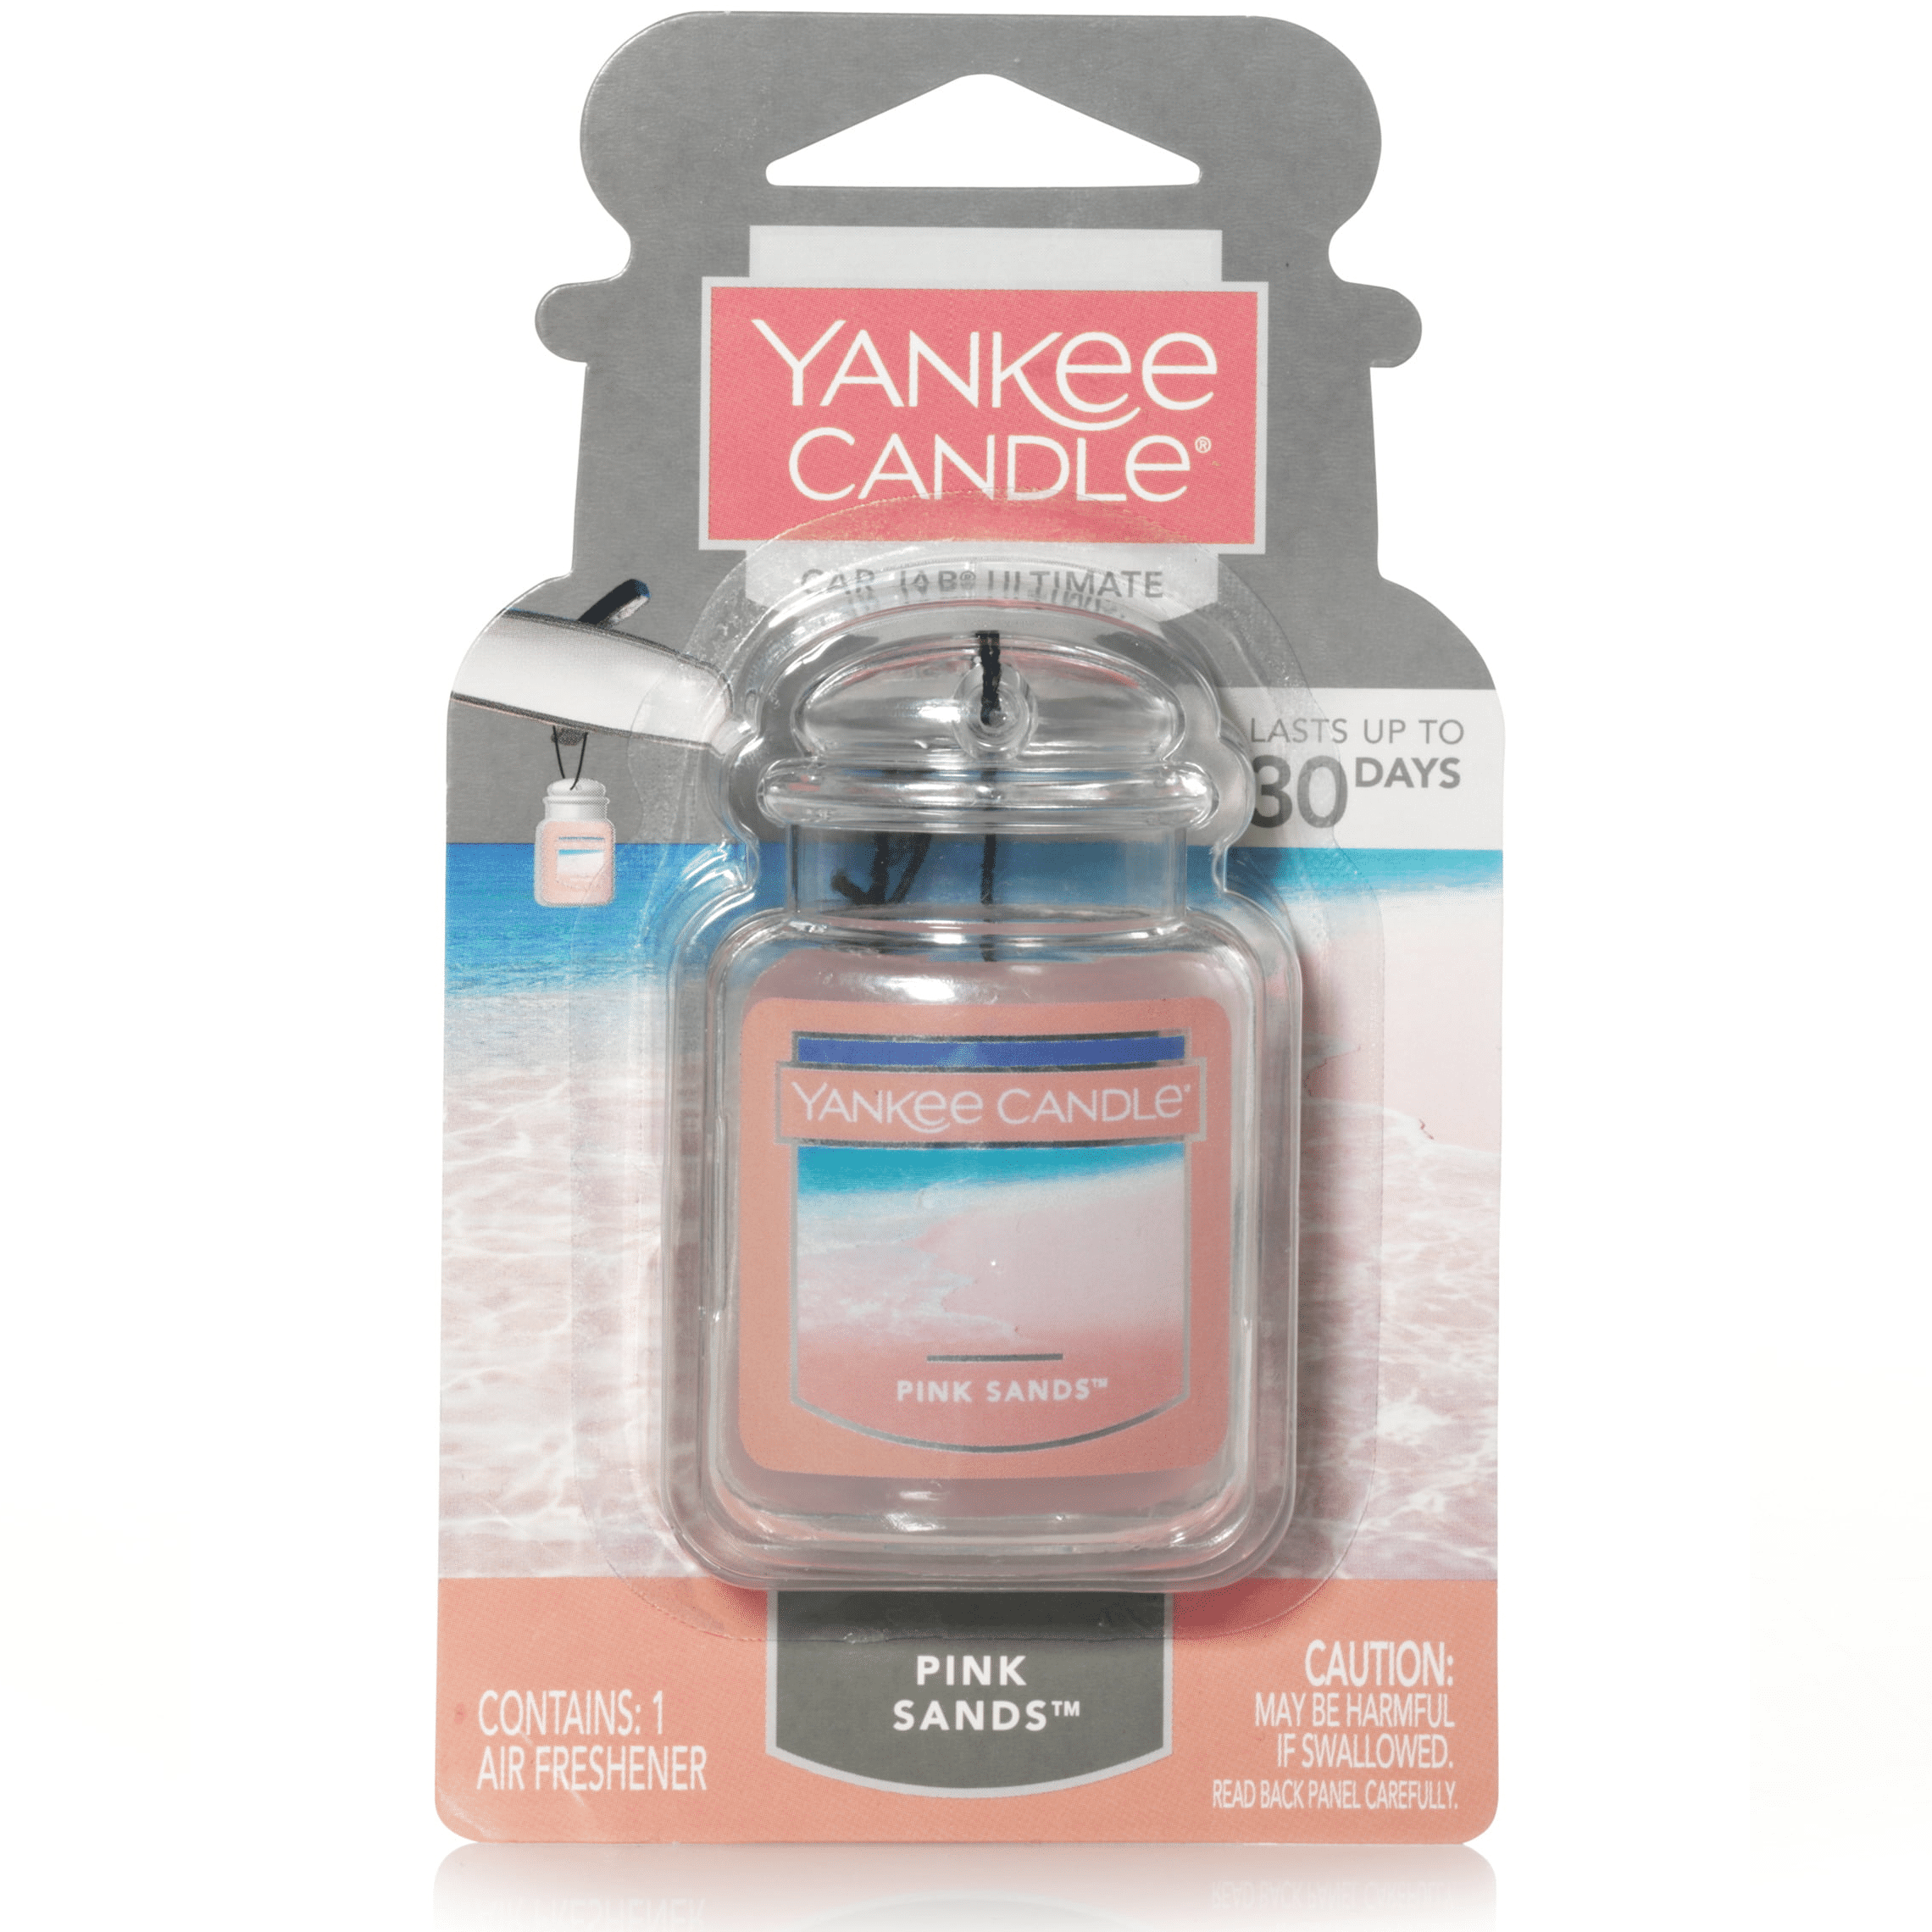 Yankee Candle Car Jar Ultimate Pink Sands Scent, Hanging Car Air Freshener,  1 Count